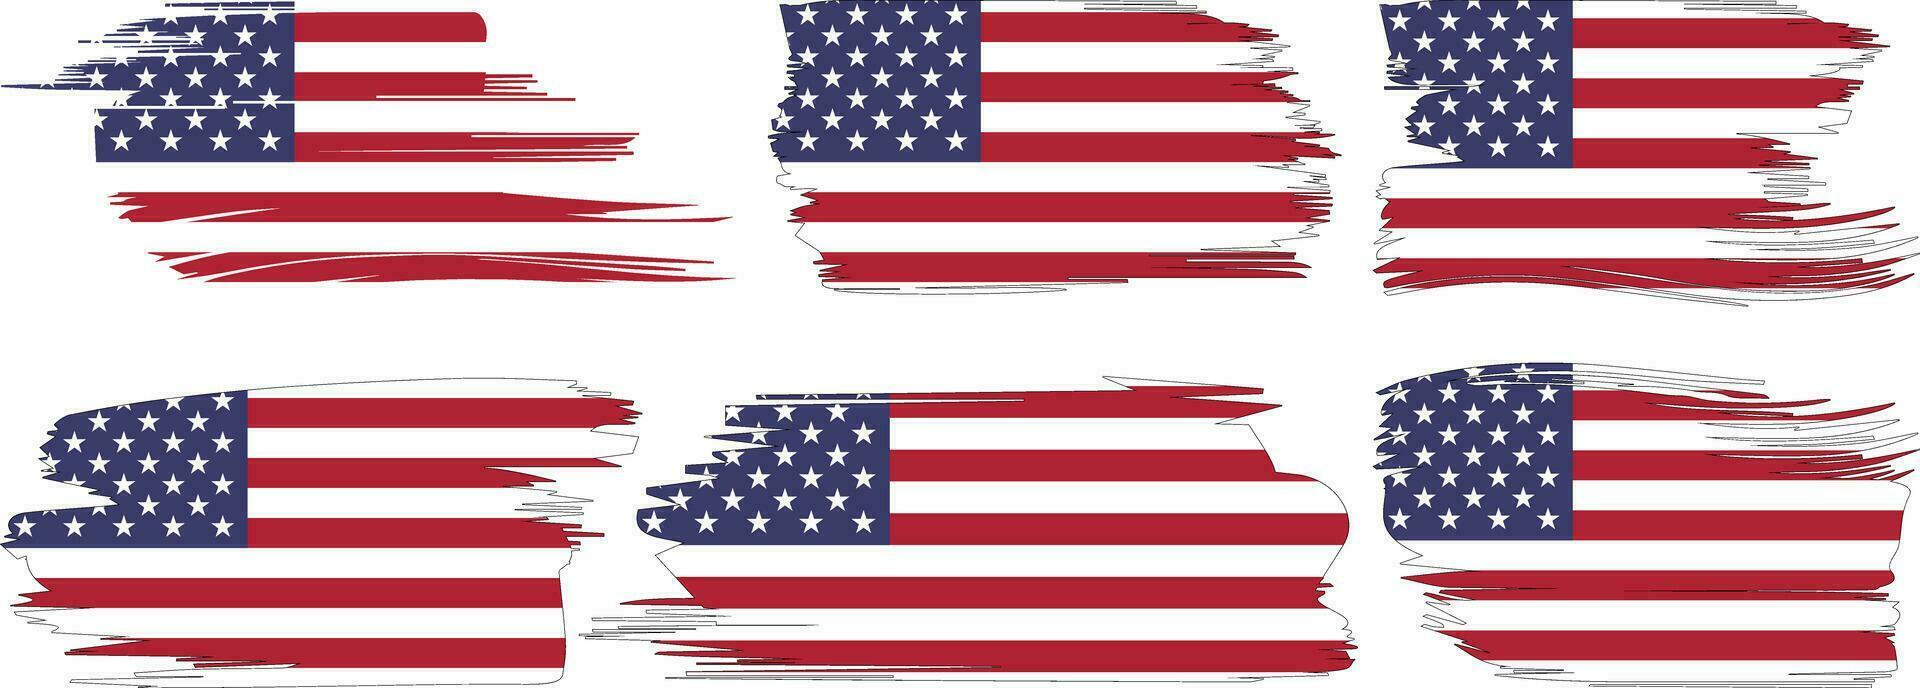 americano bandeira silhueta, grunge EUA bandeira conjunto vetor, grunge, bandeira, silhueta, independência, julho, 4º do julho, 4º julho, bandeira silhueta vetor